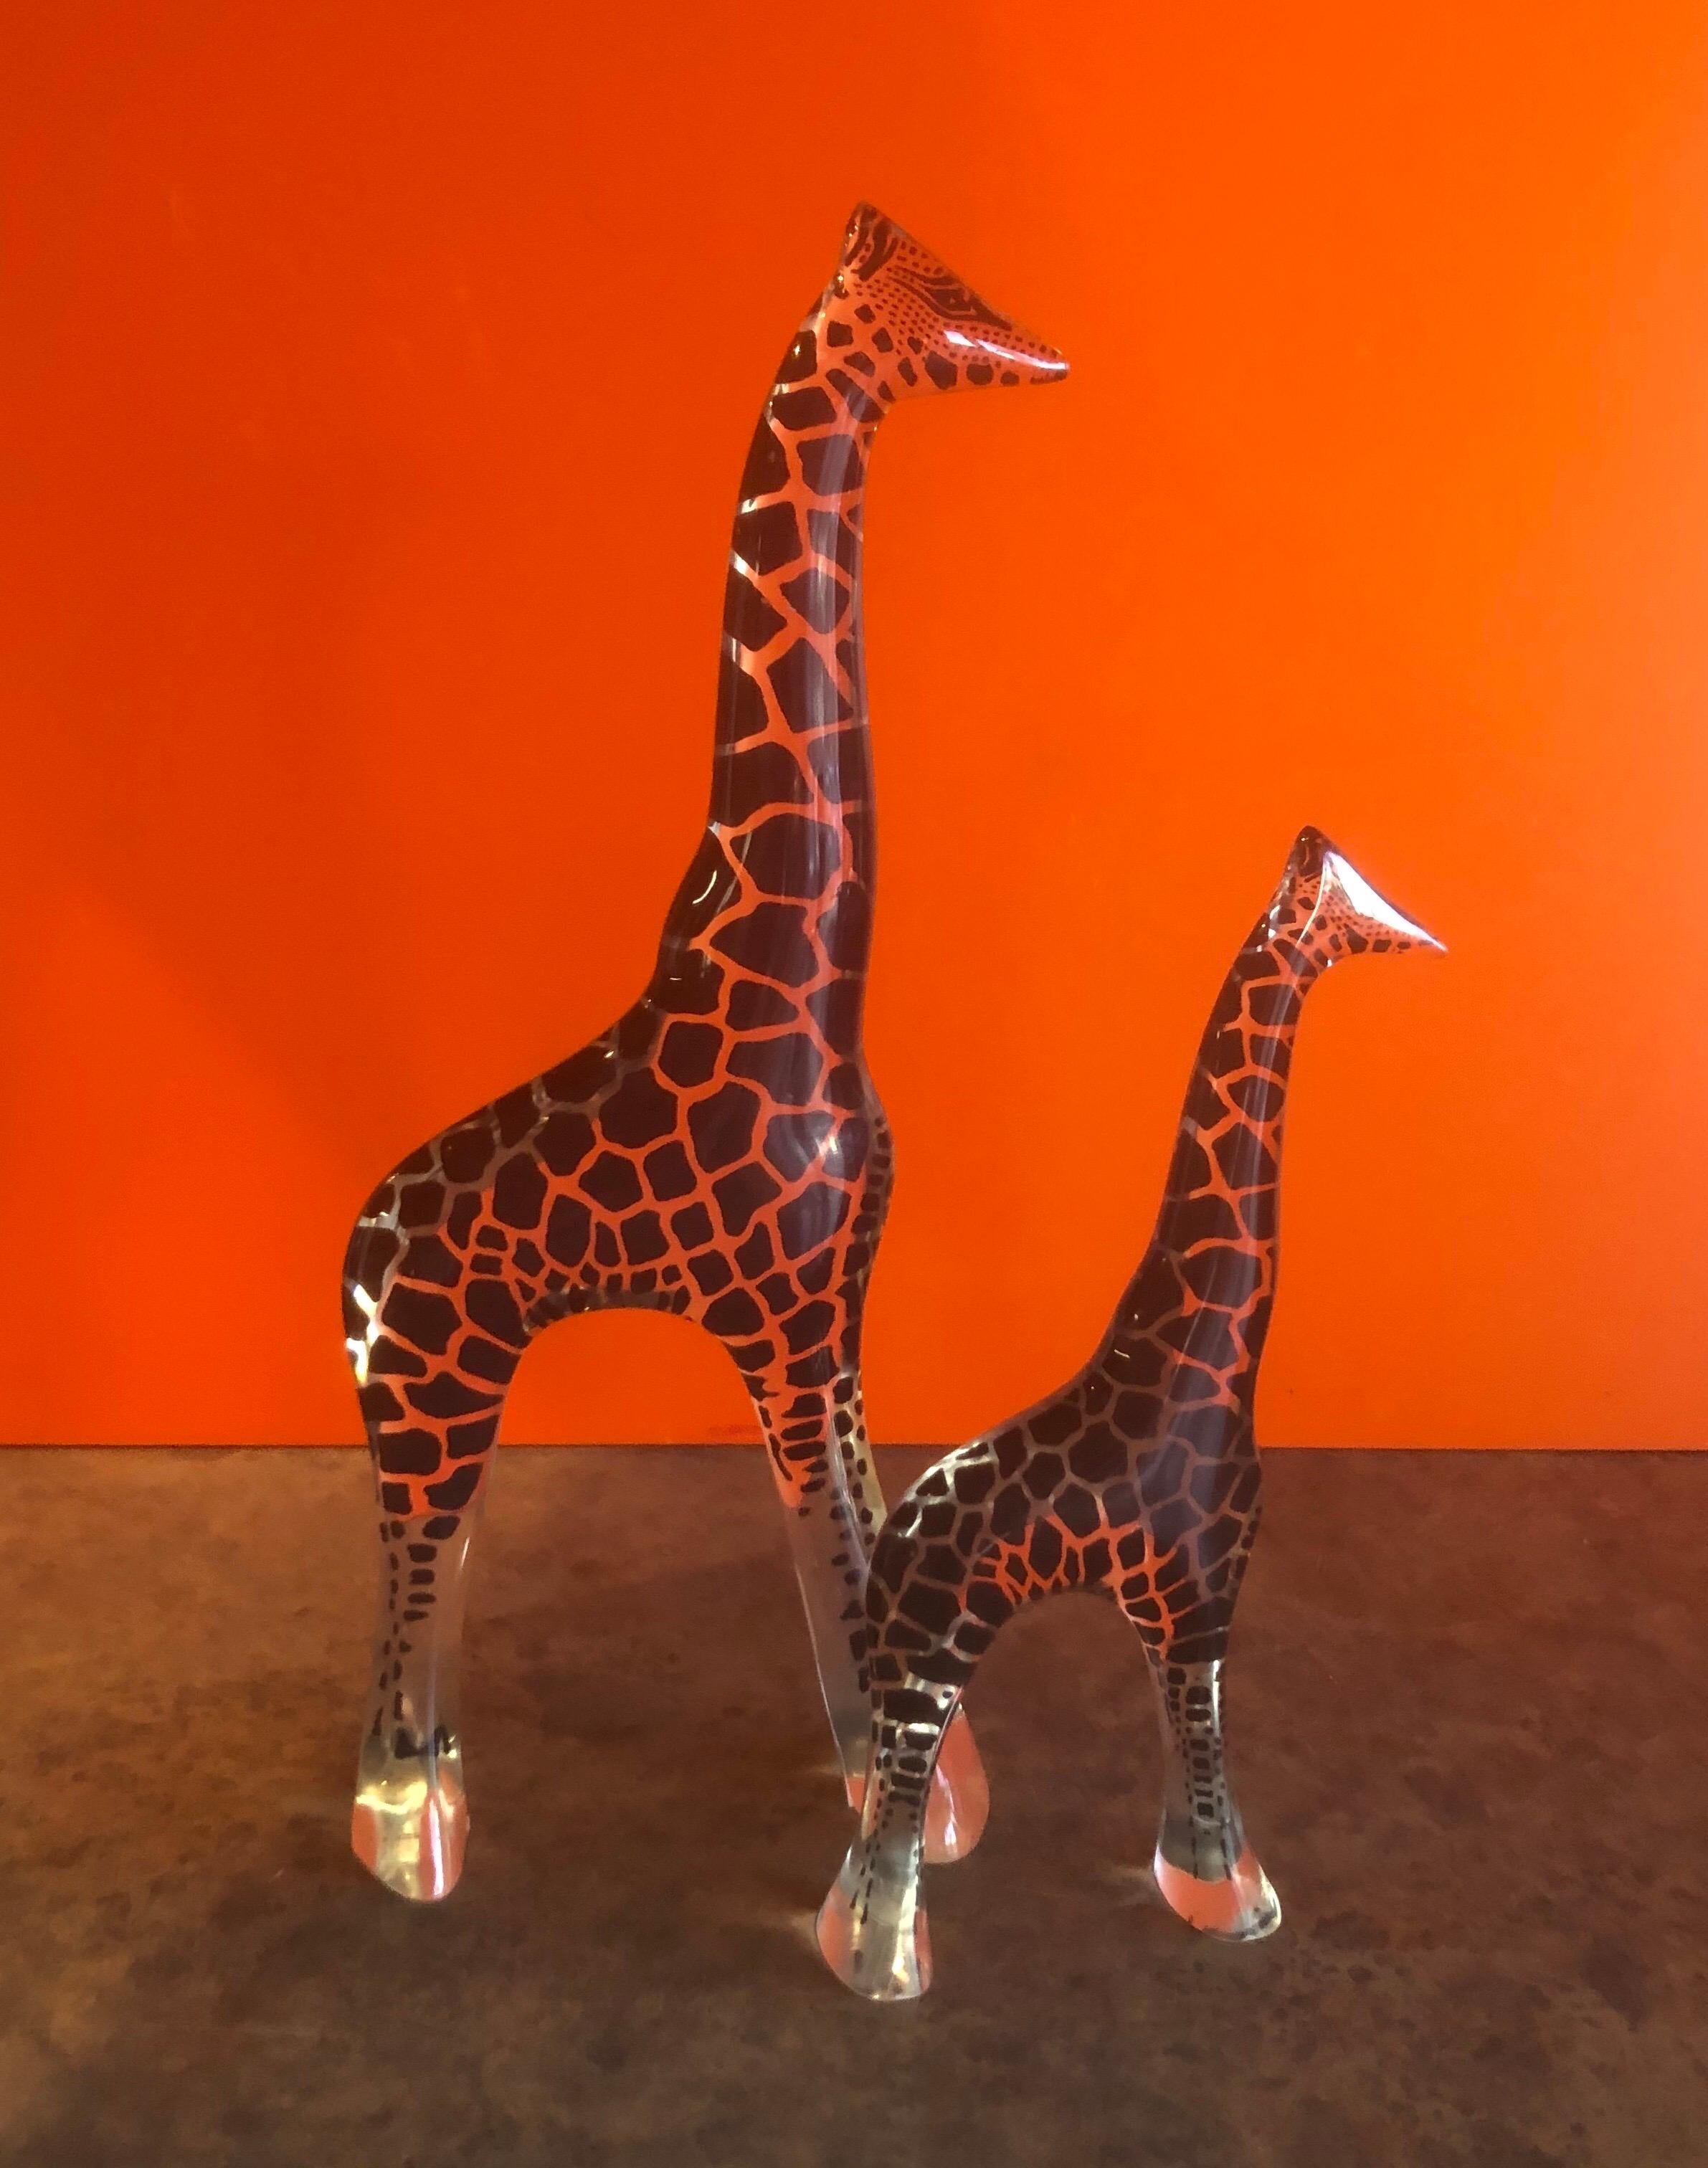 Pair of midcentury Lucite giraffe sculptures by Brazilian artist Abraham Palatnik, circa 1960s. Palatnik was a Pioneer in the 